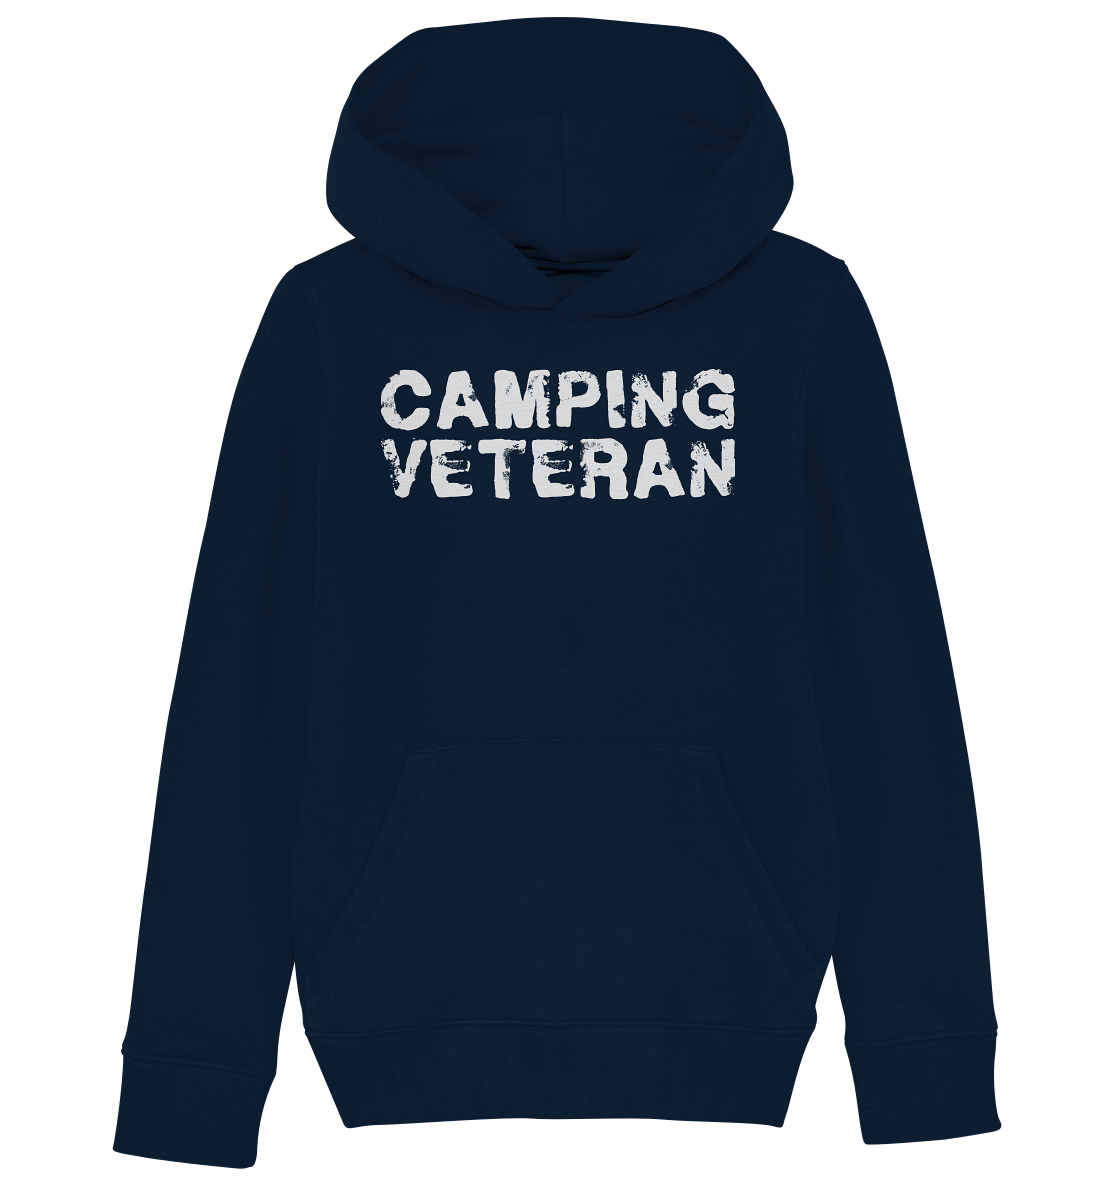 Camping Veteran - Kids Organic Hoodie